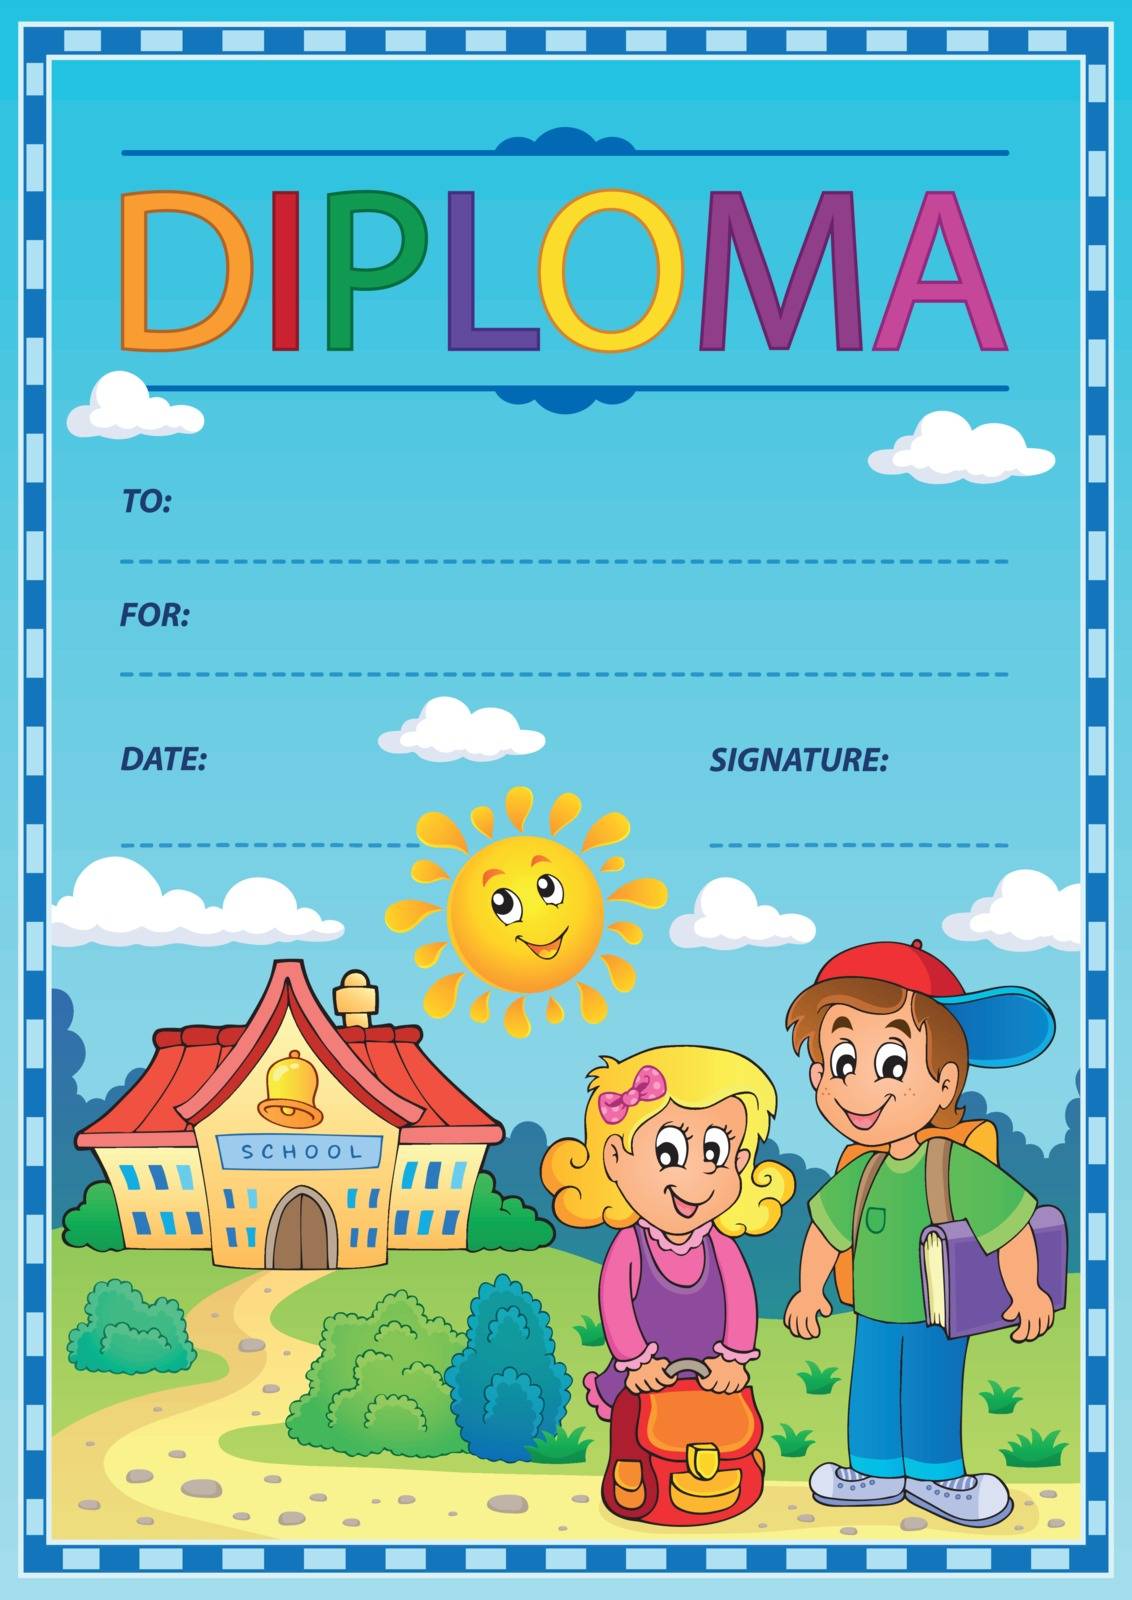 Diploma subject image 4 - eps10 vector illustration.